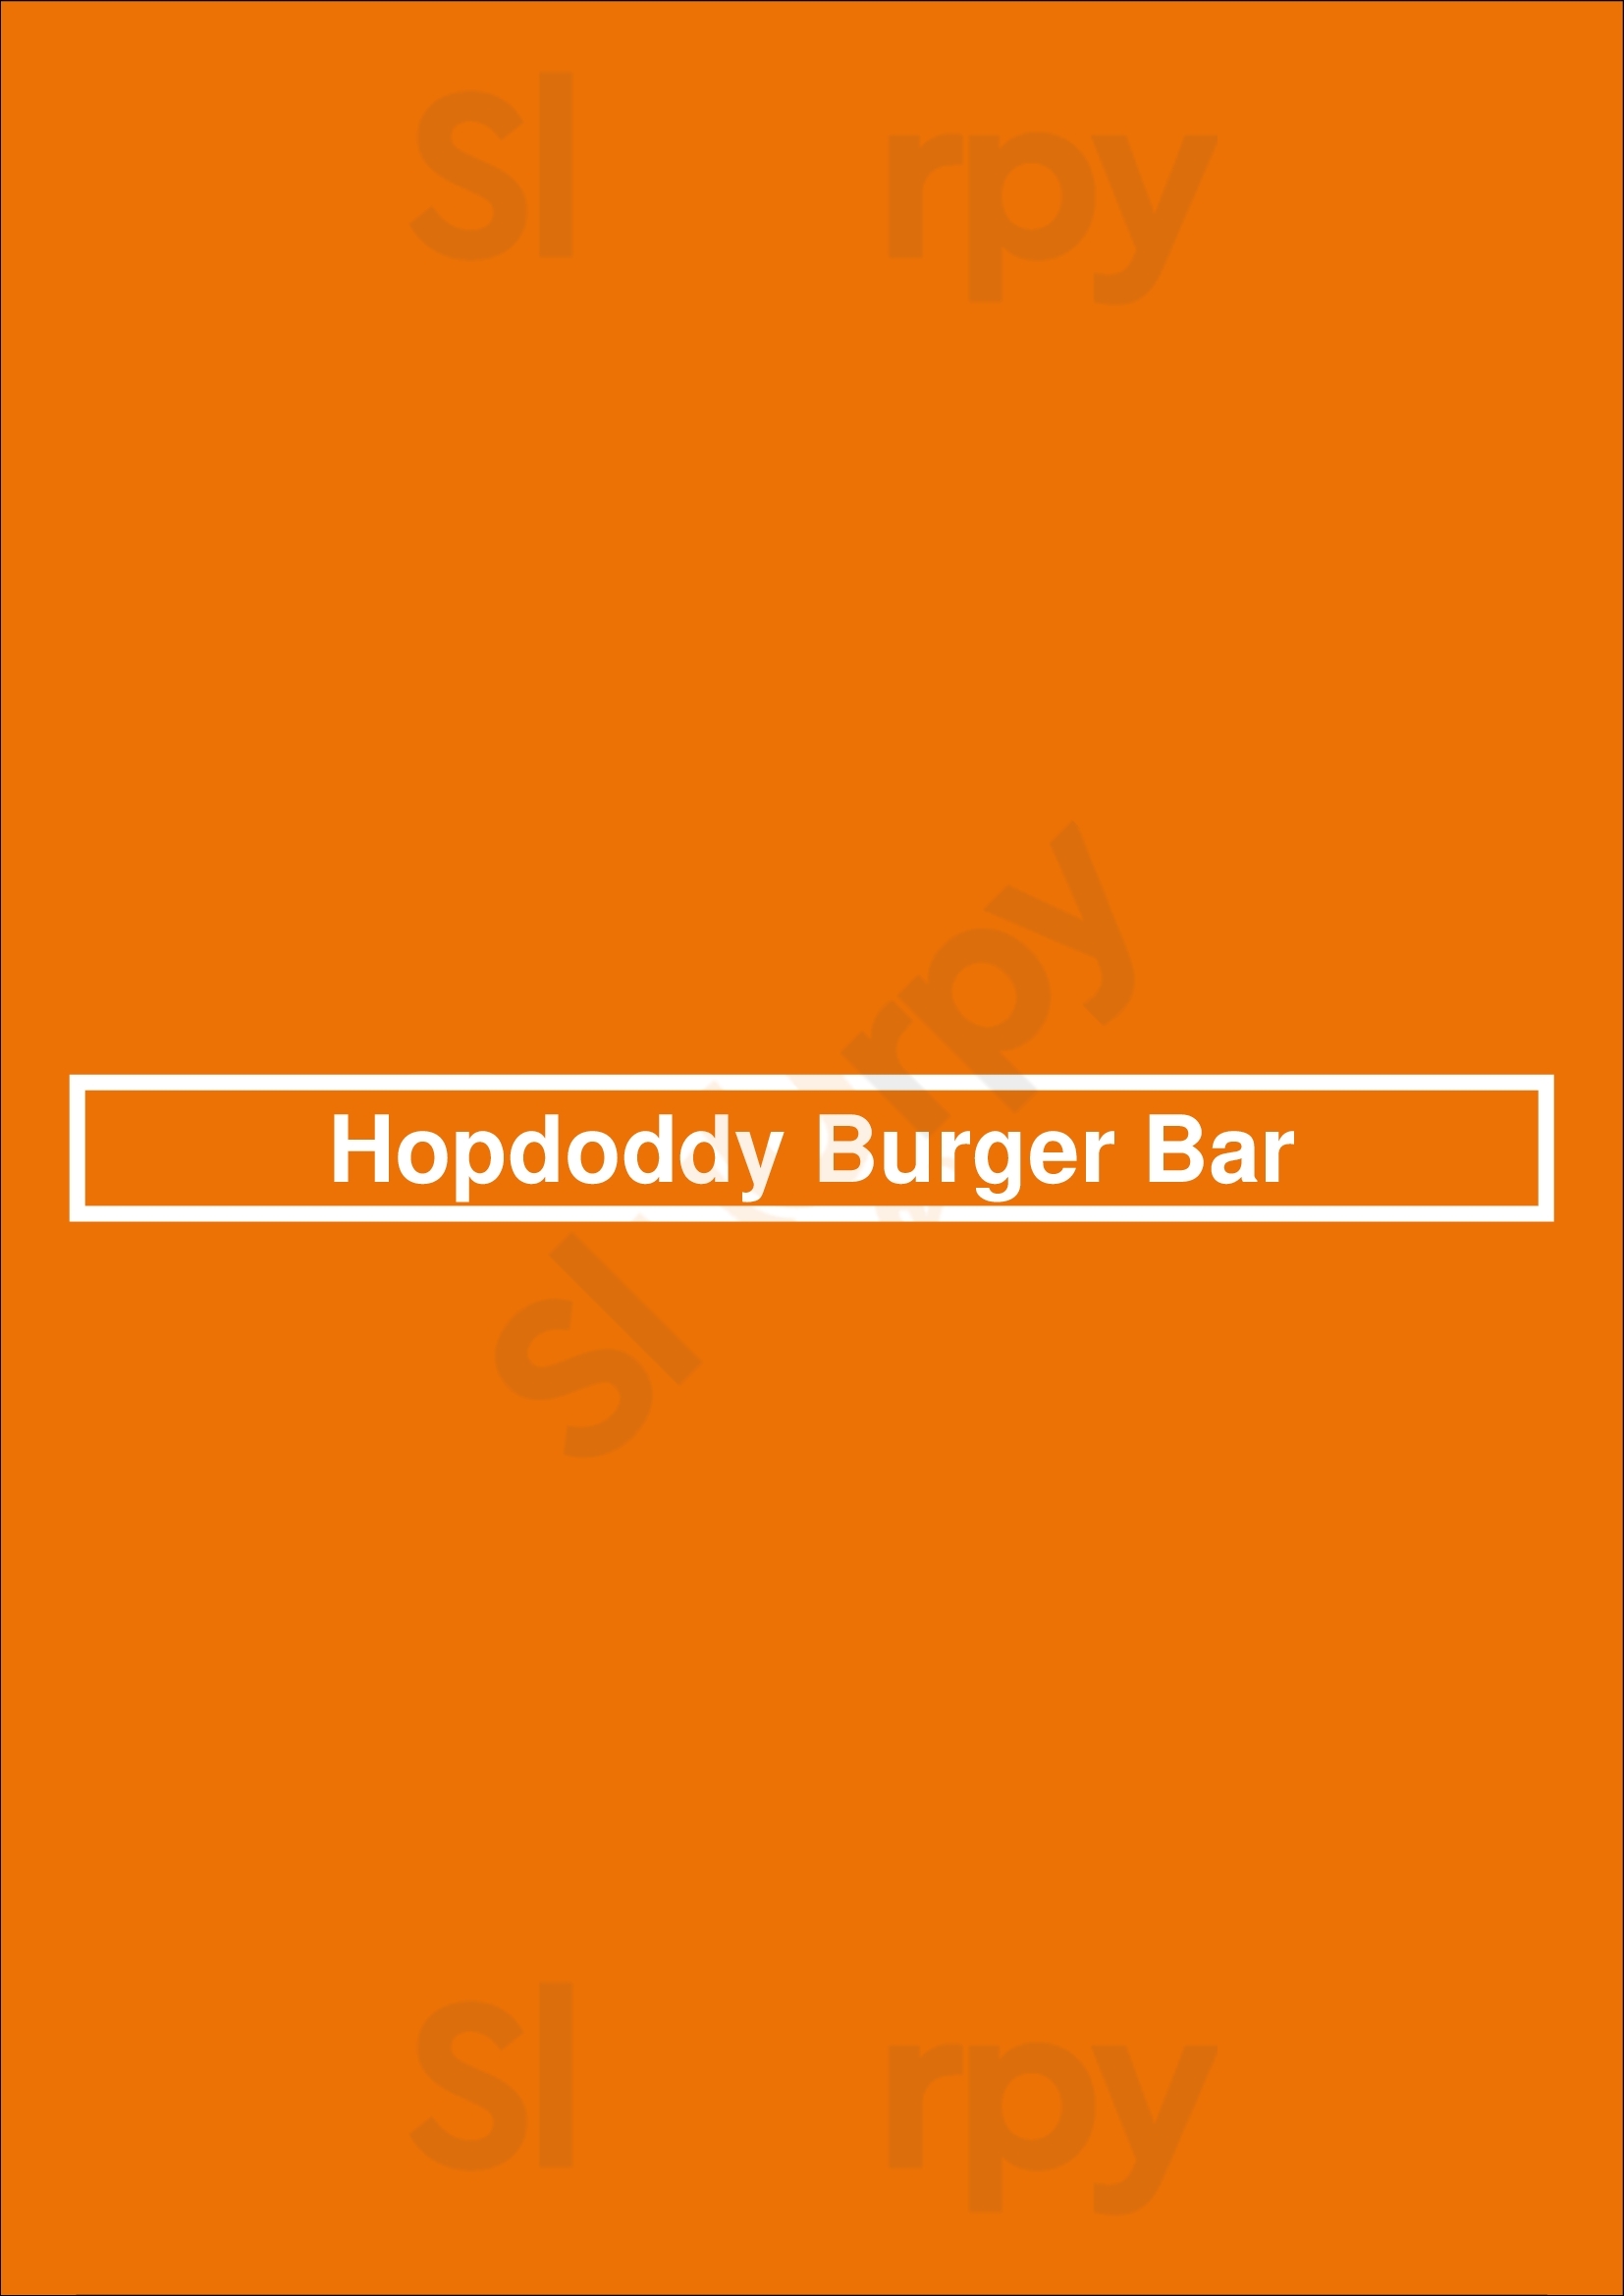 Hopdoddy Burger Bar Nashville Menu - 1